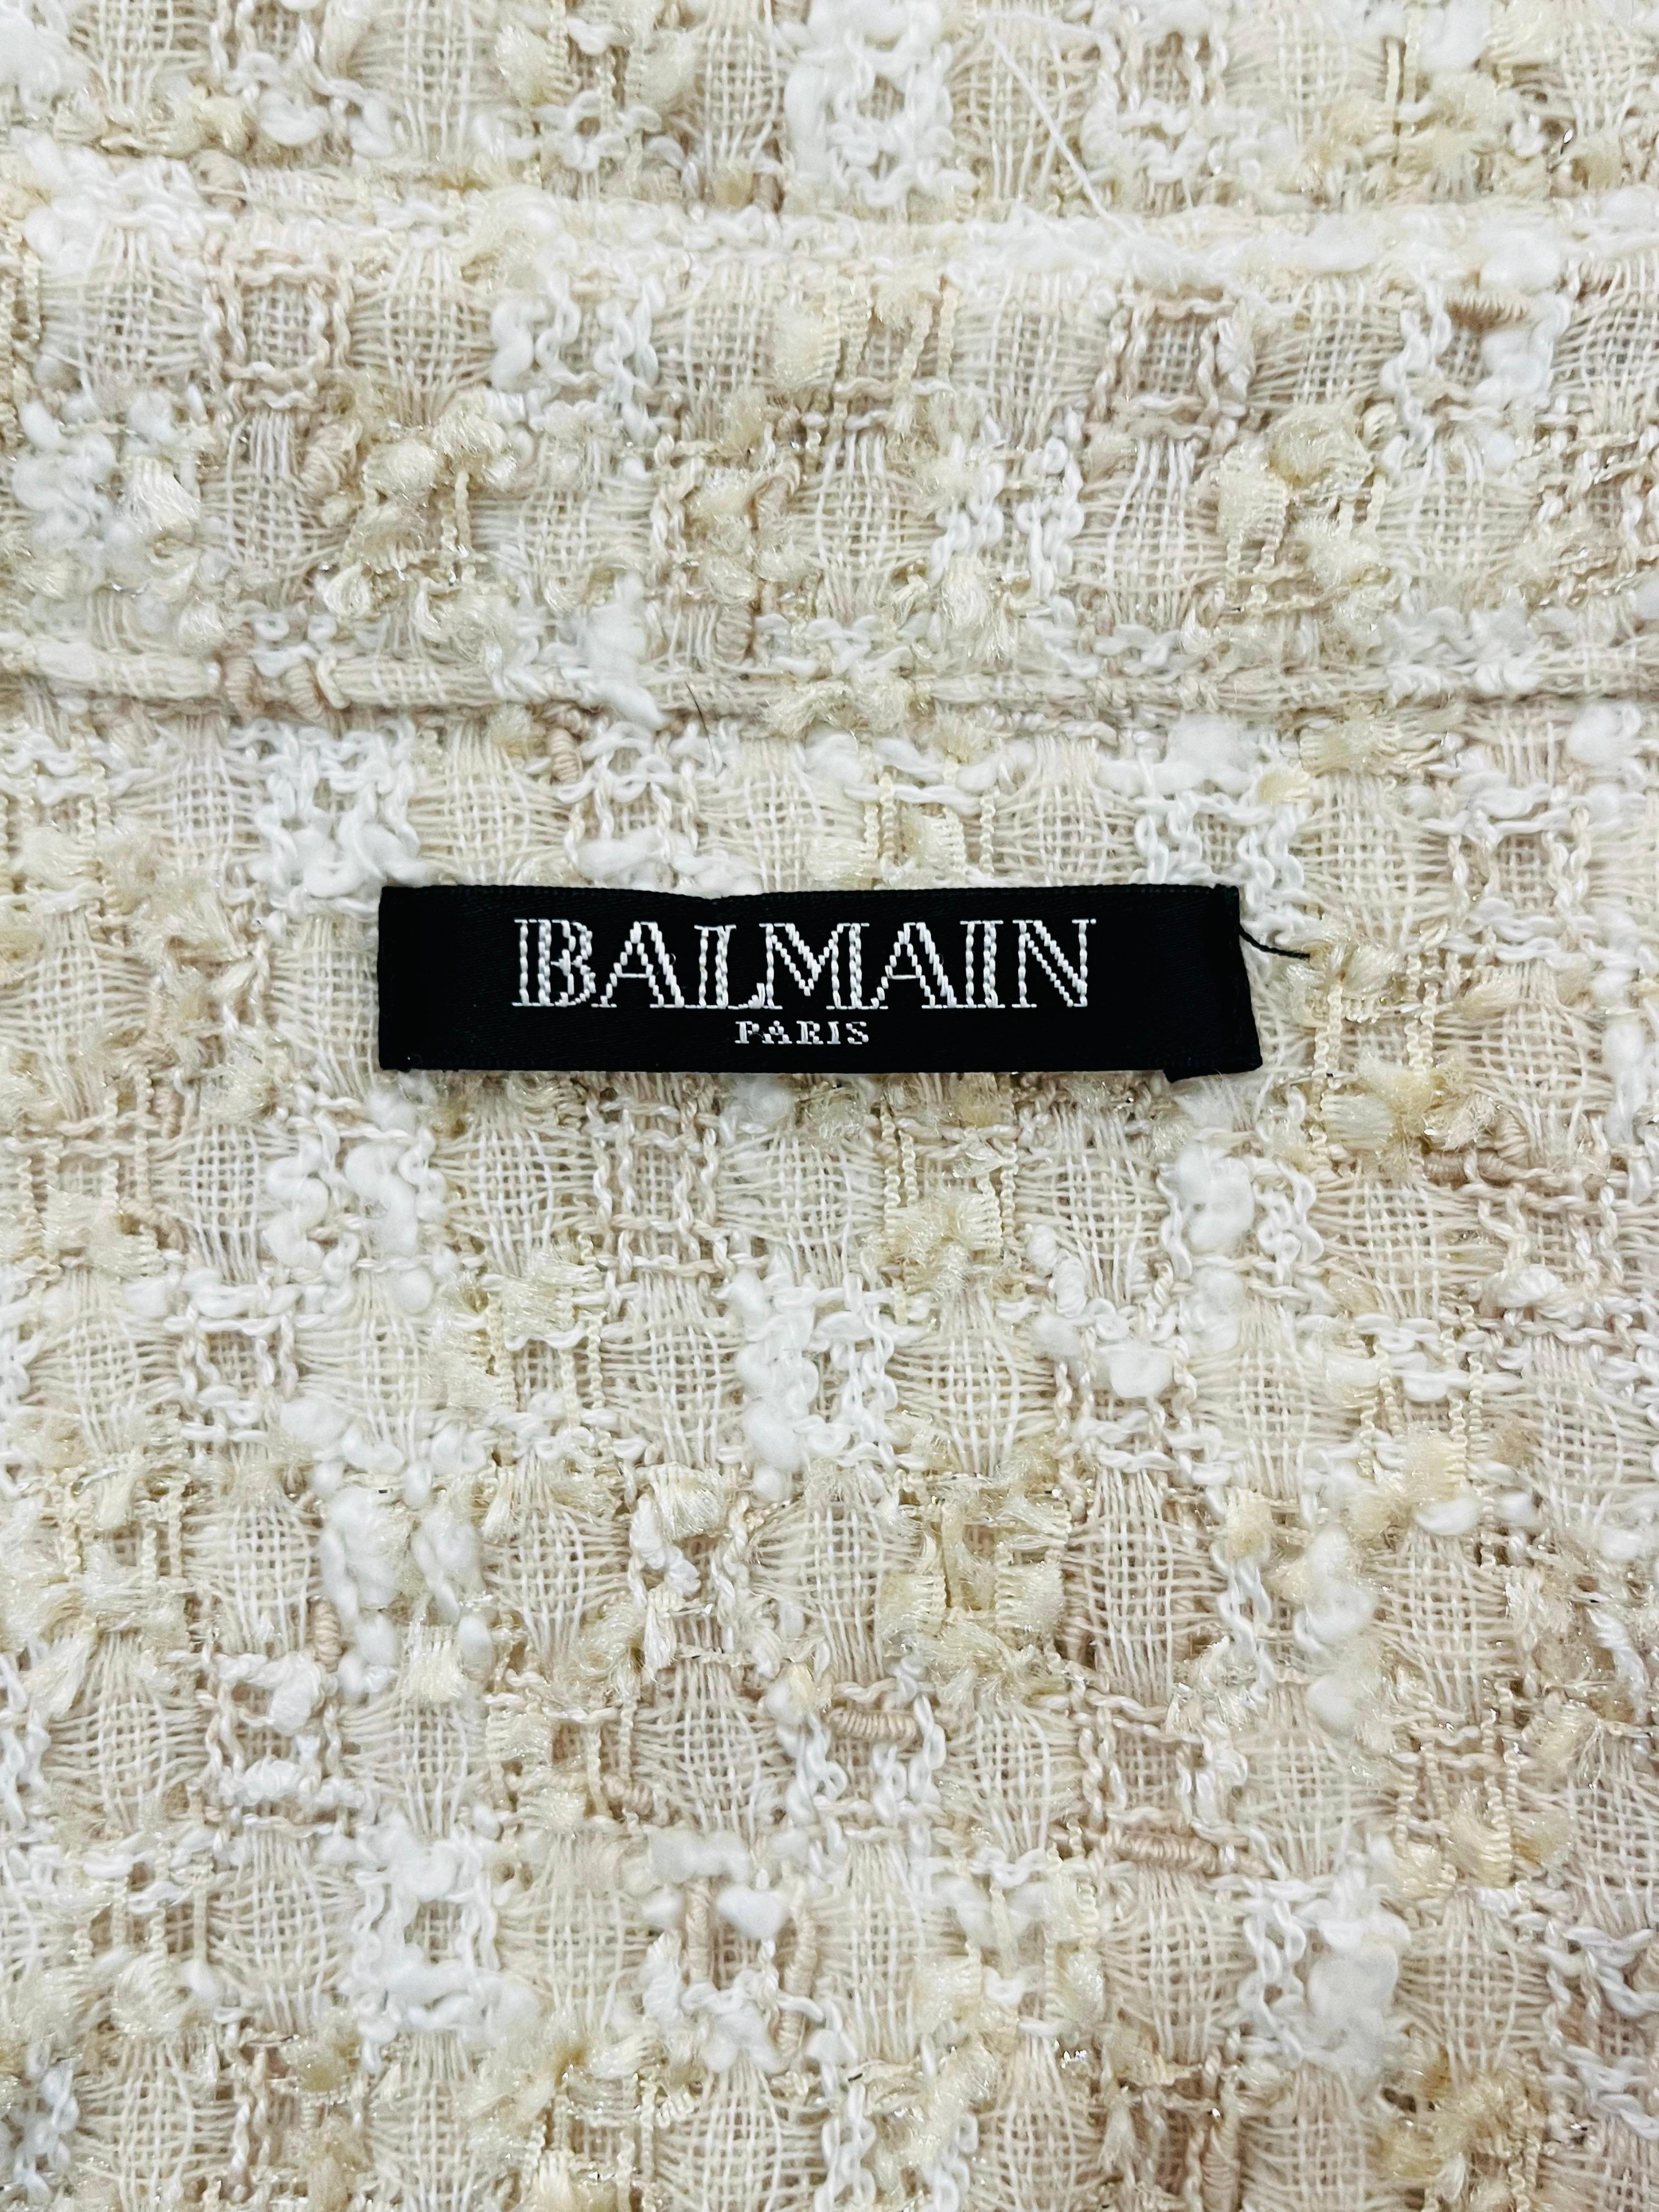 Balmain Tweed Wool Blend Shirt For Sale 3